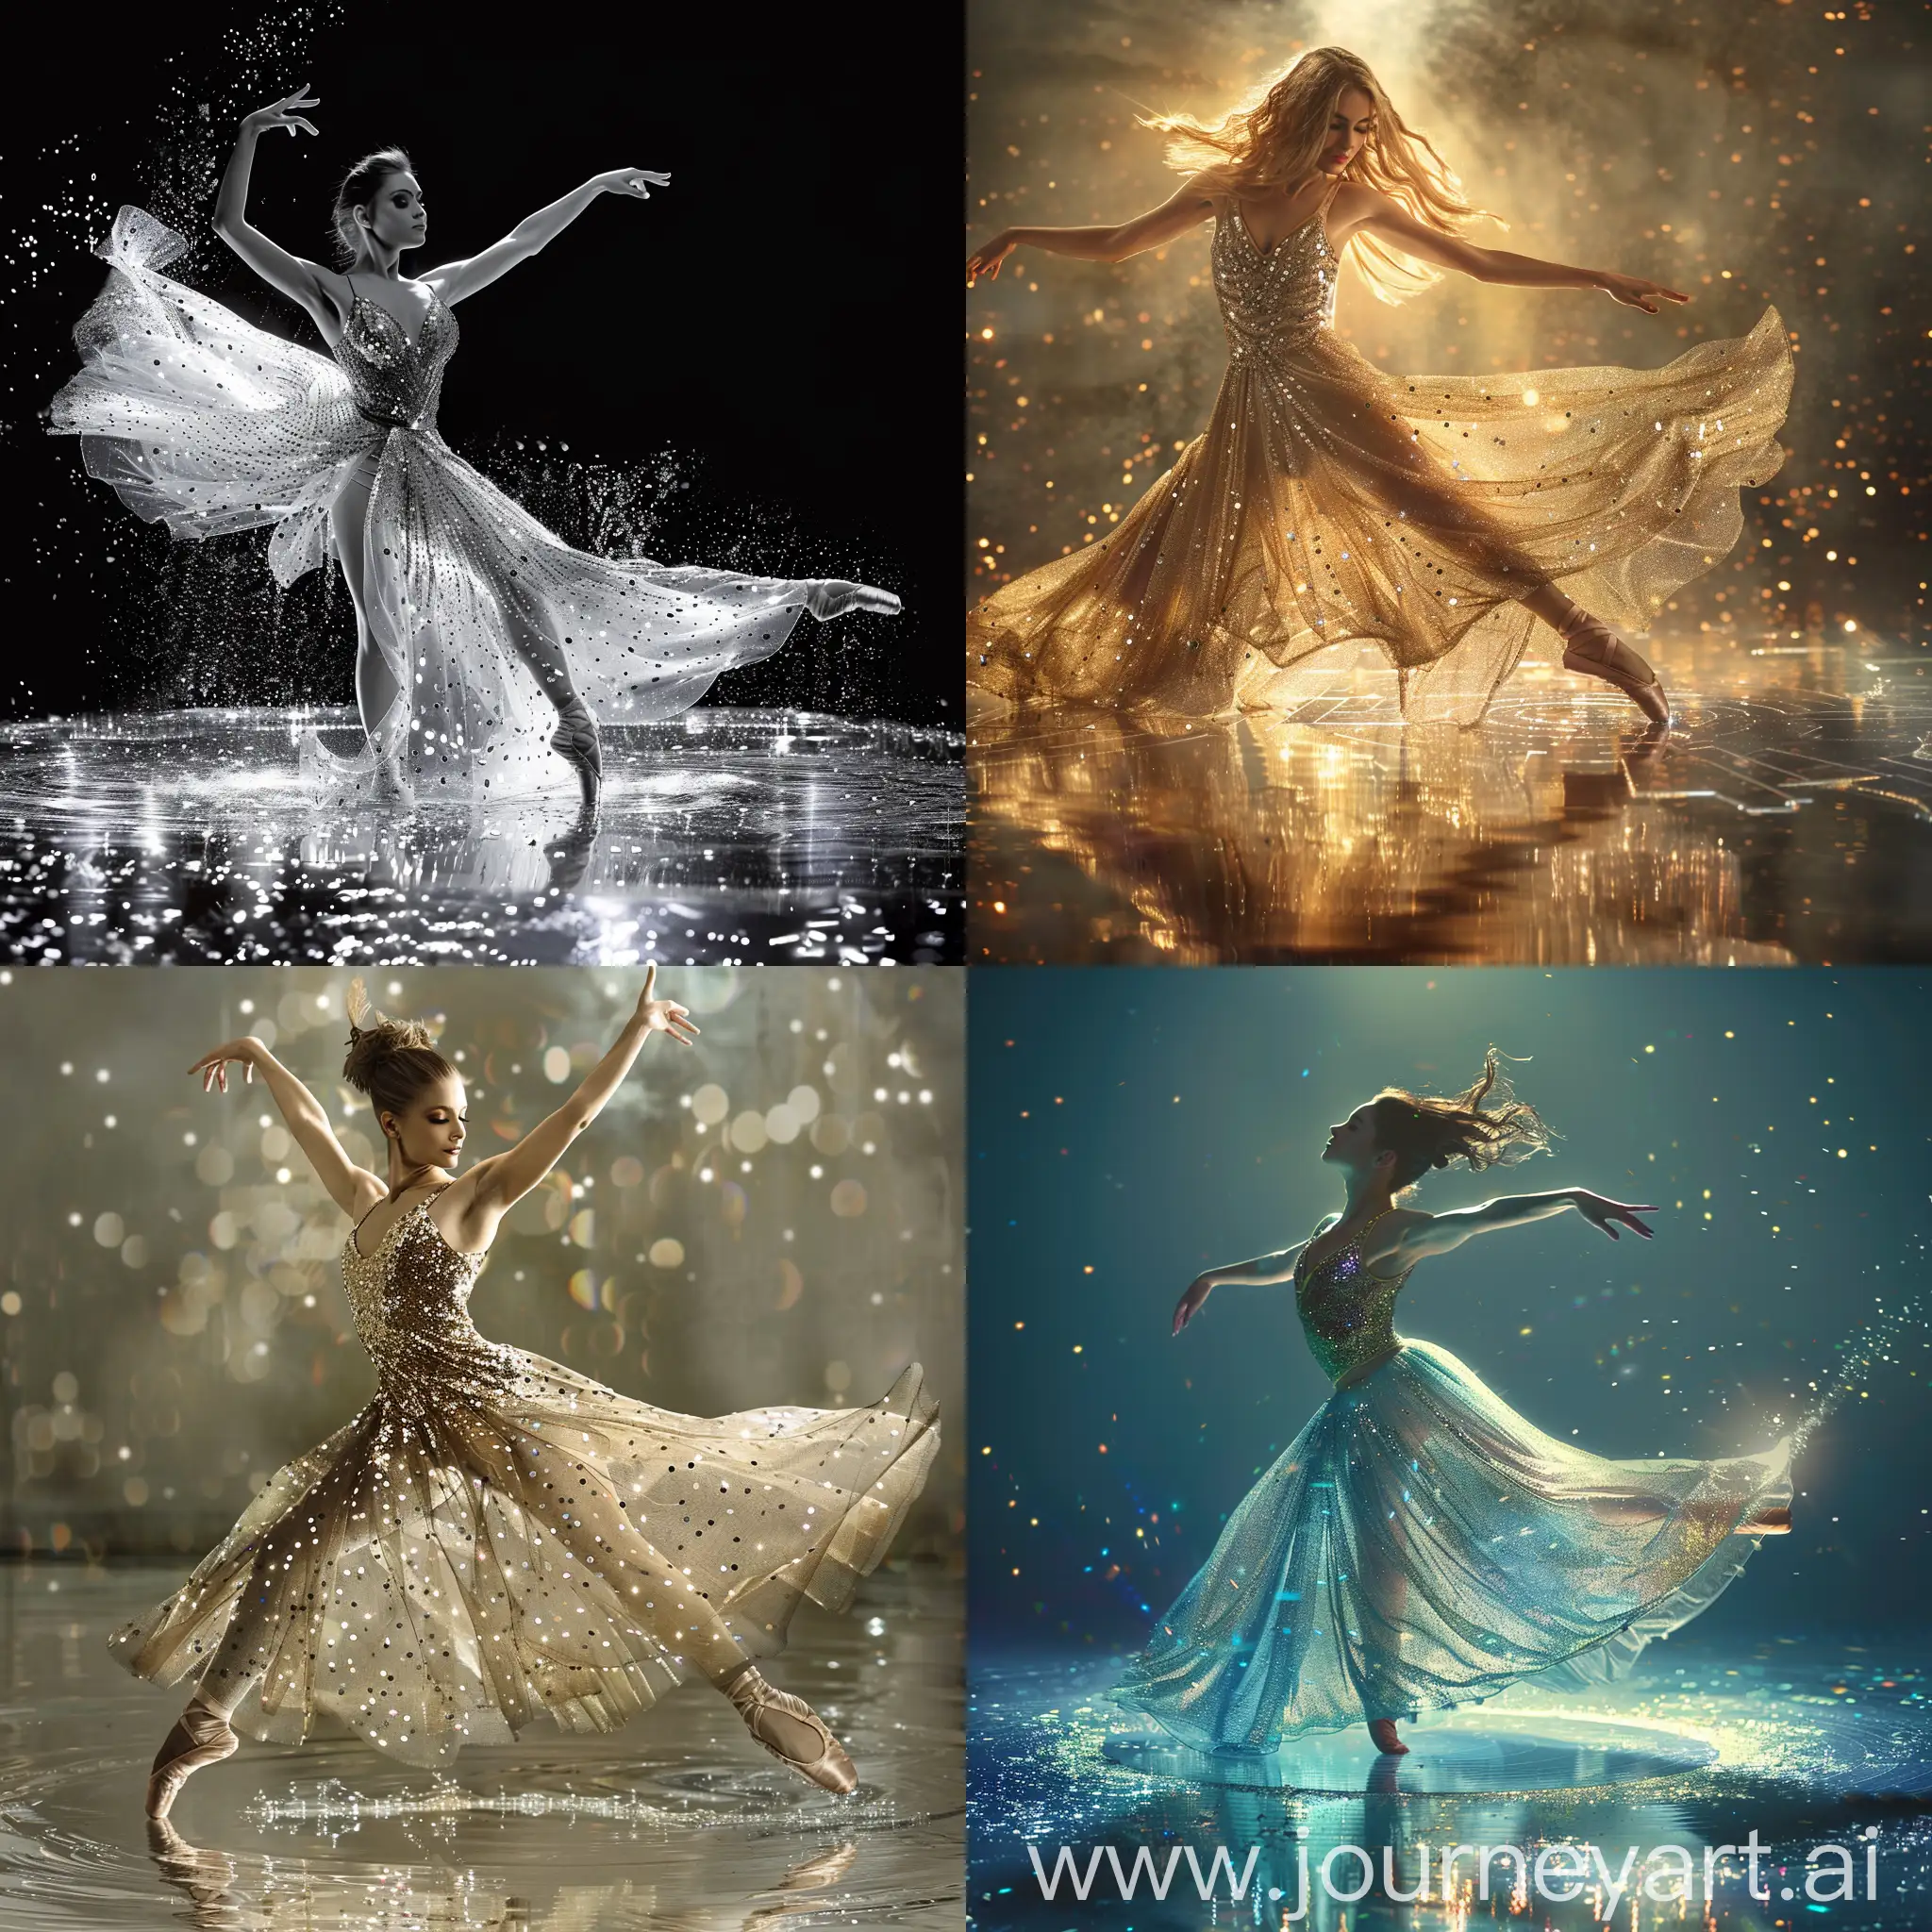 Graceful-Ballerina-Dancing-on-Mercury-with-Sparkling-Sequin-Dress